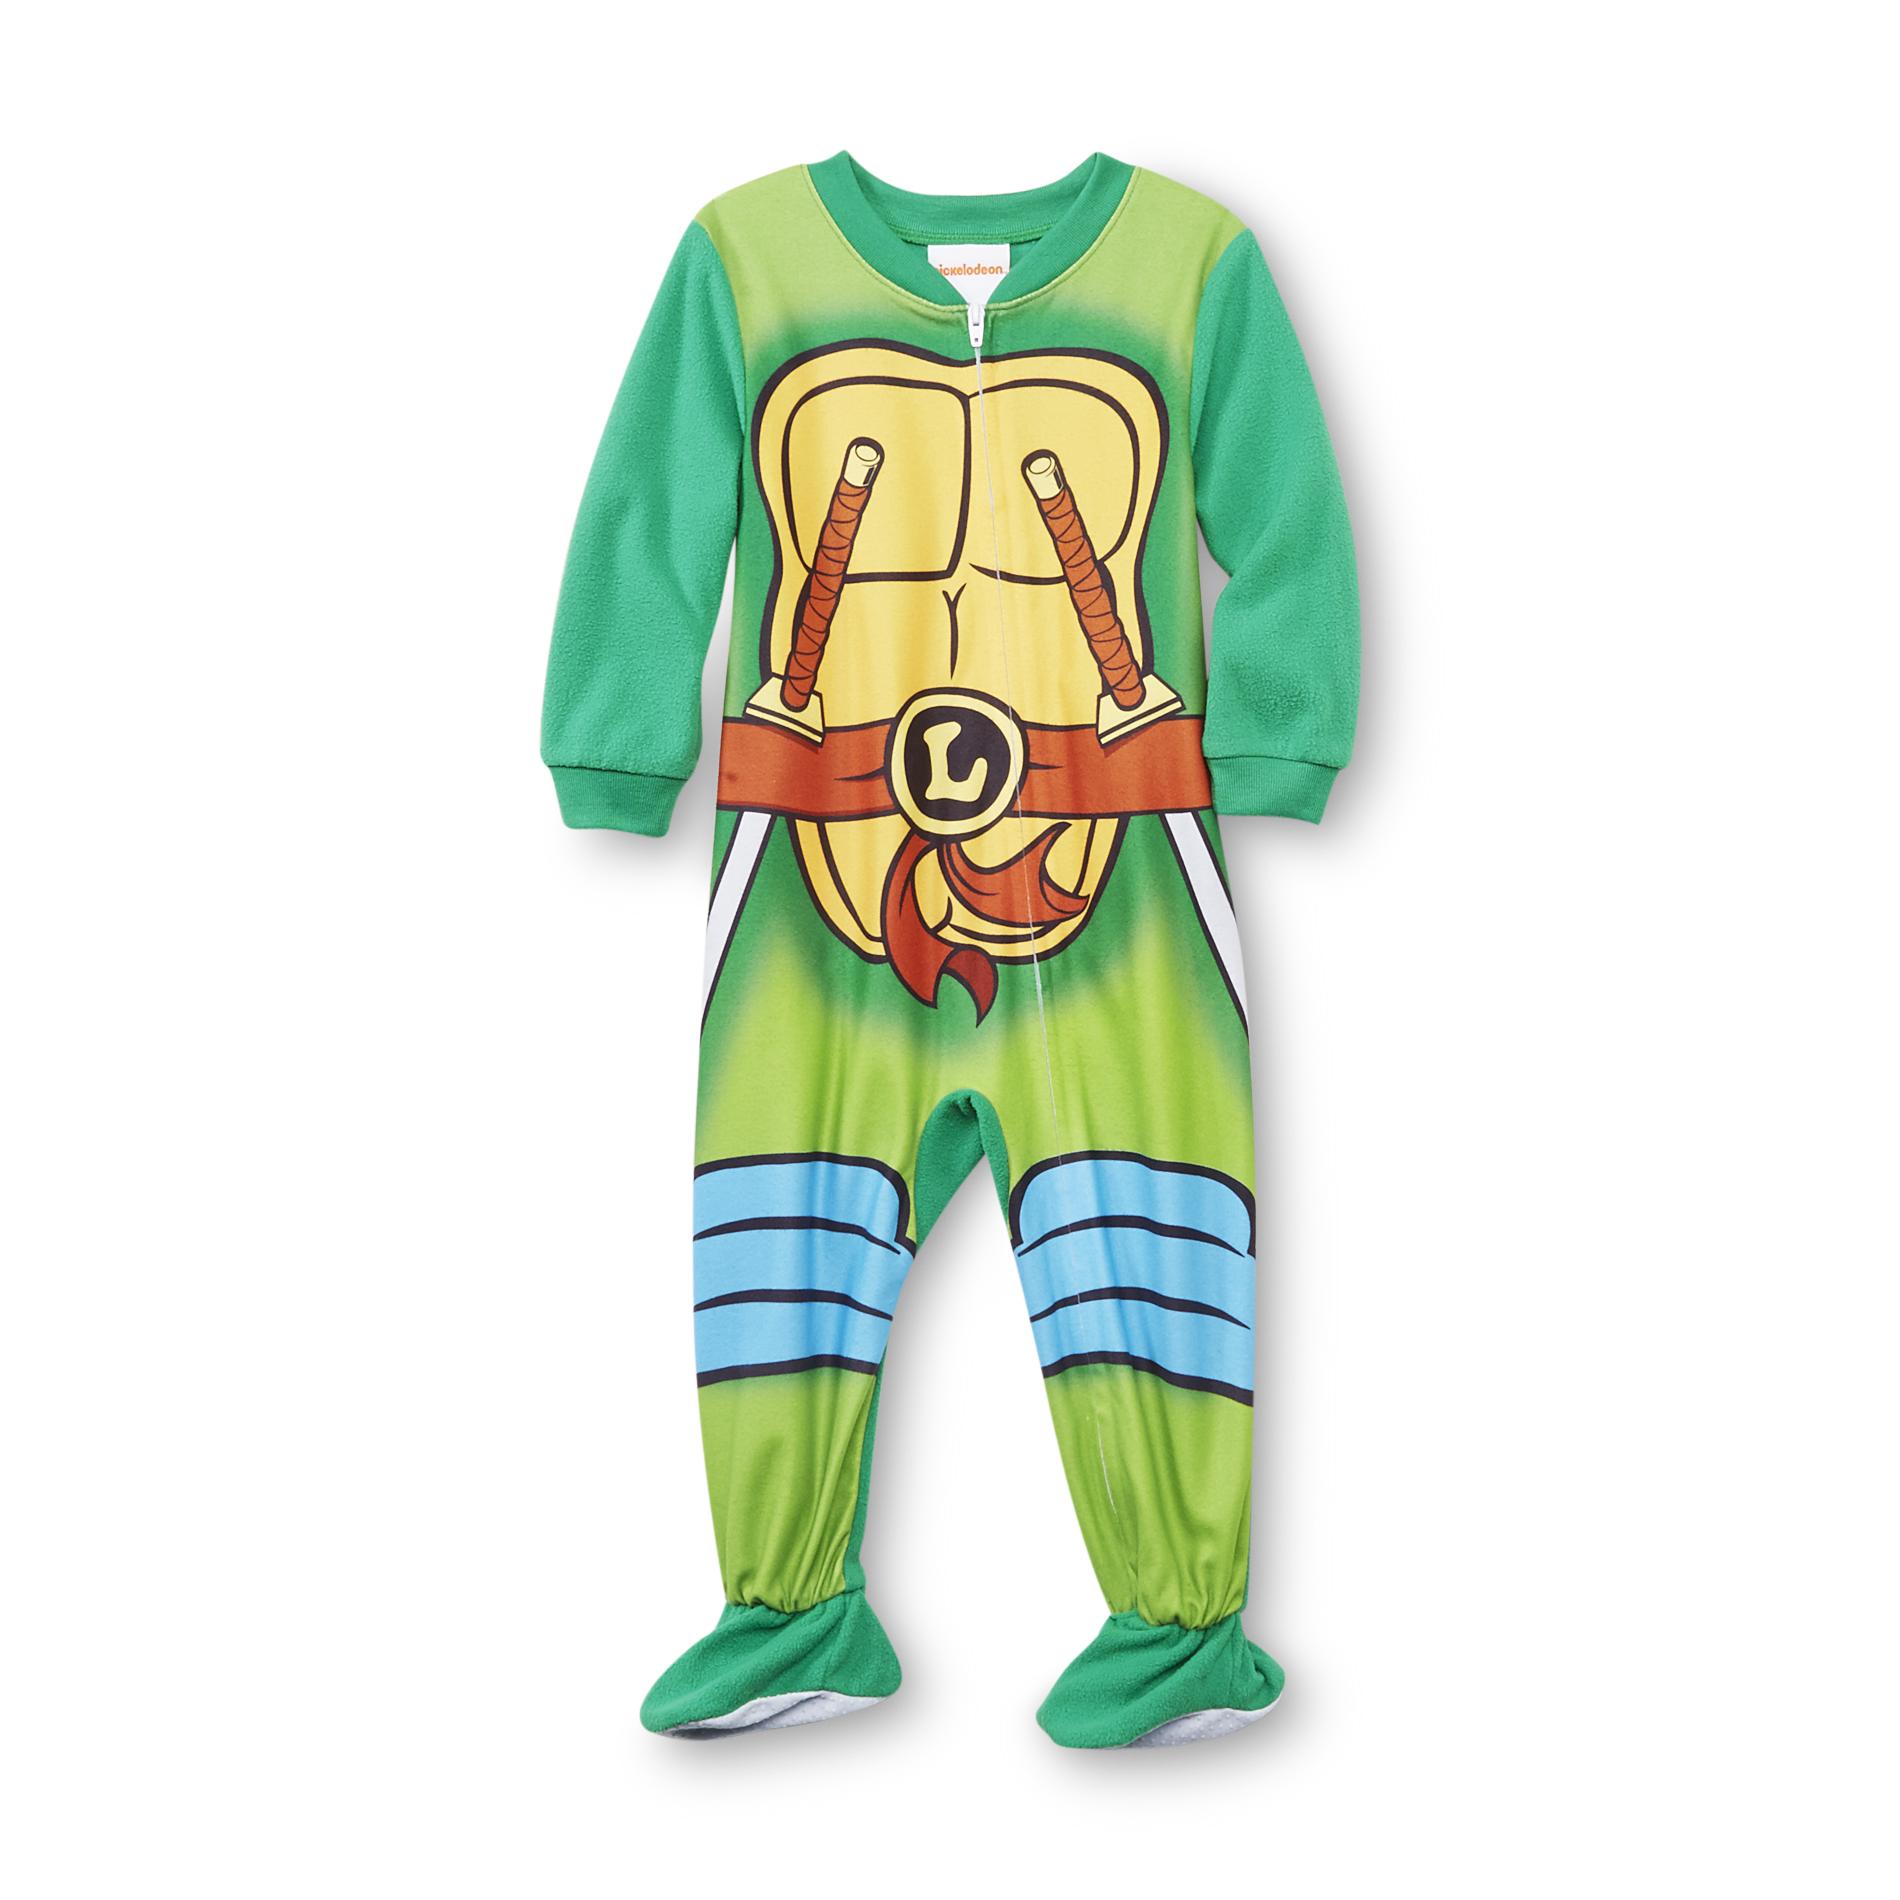 Nickelodeon Teenage Mutant Ninja Turtles Infant & Toddler Boy's Sleeper Pajamas